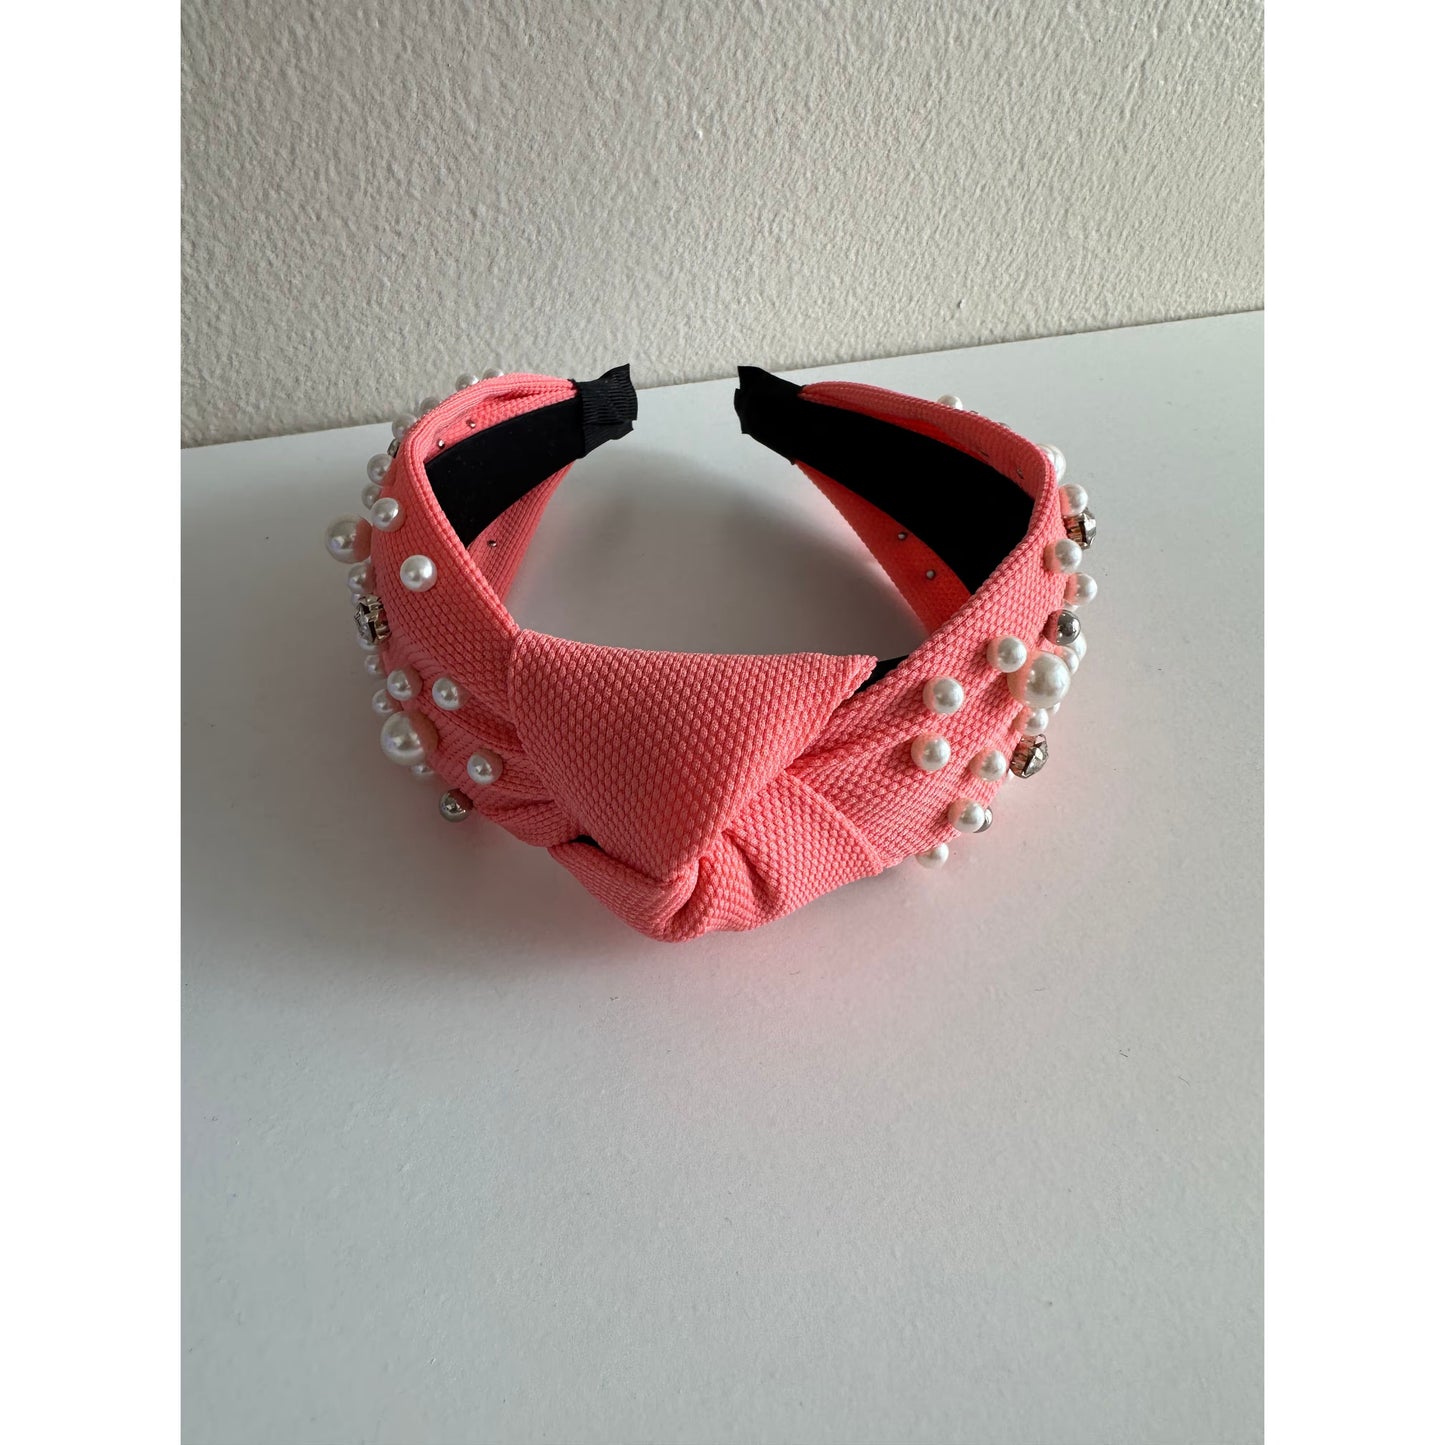 Pink jeweled headband